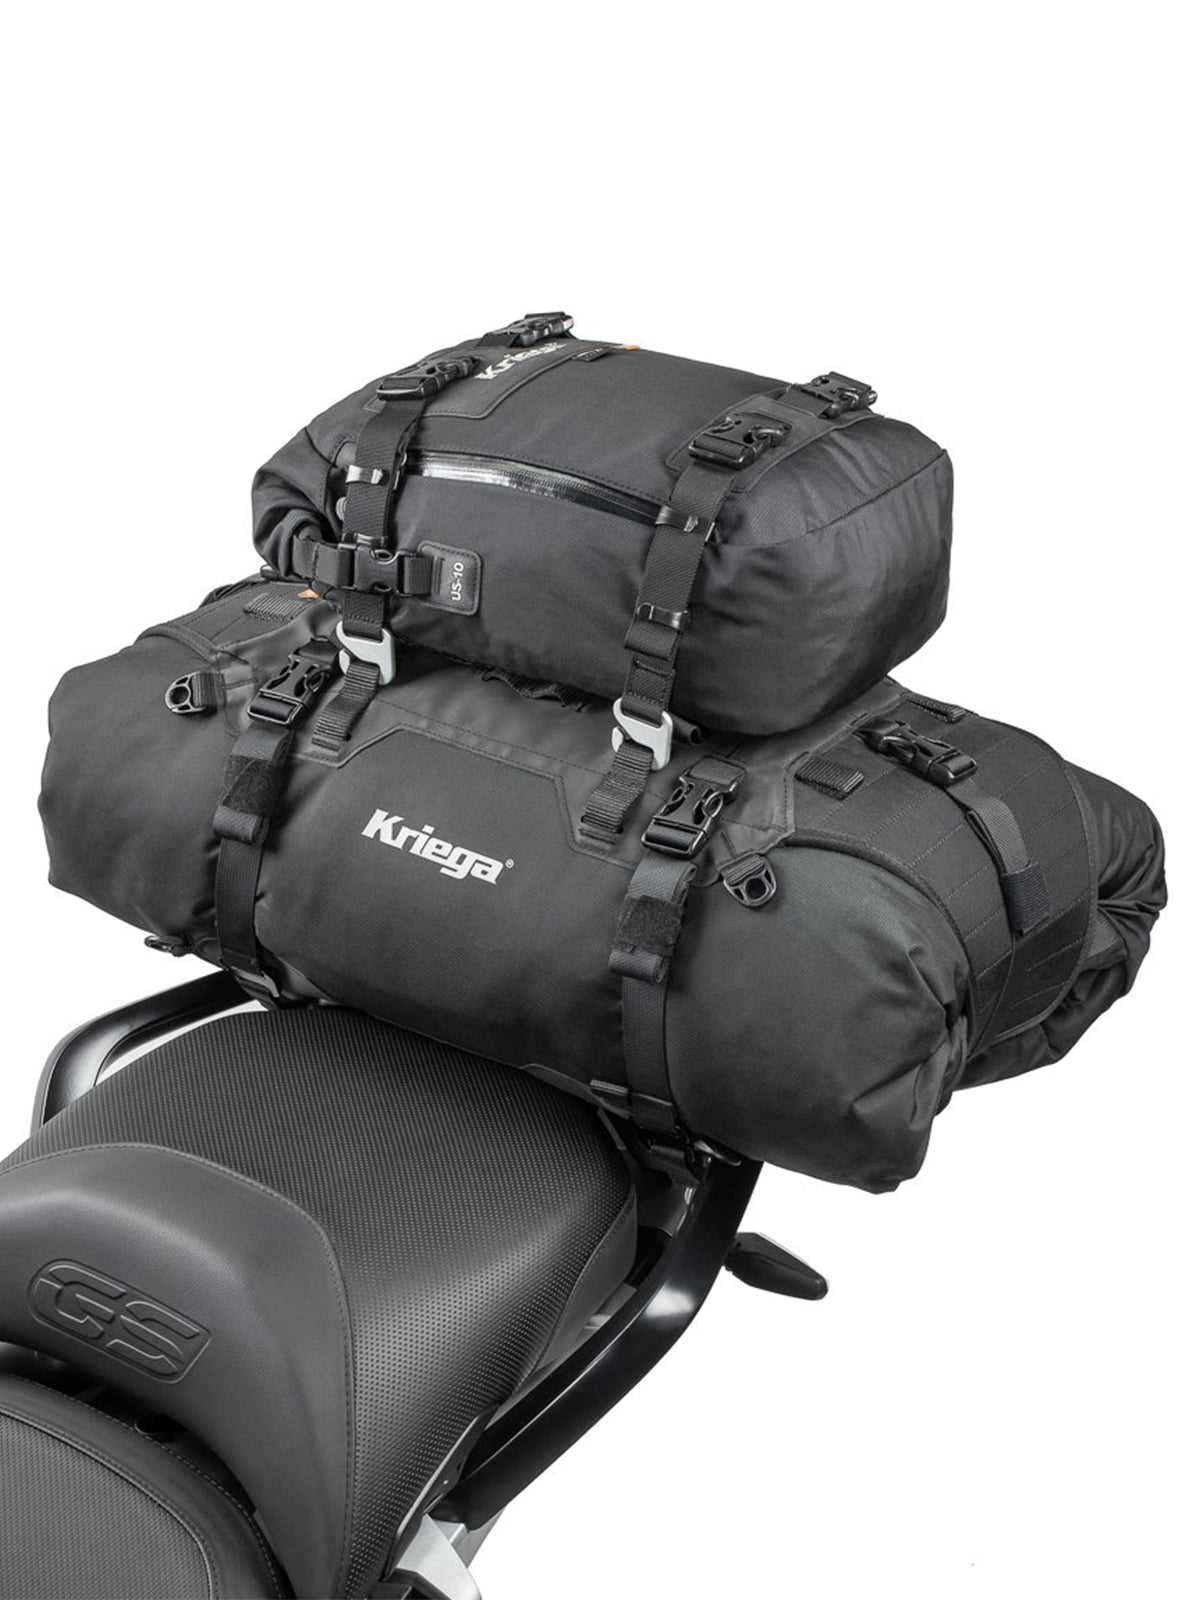 Kriega R1250 GS/F750/850 Fit Kit for top packs